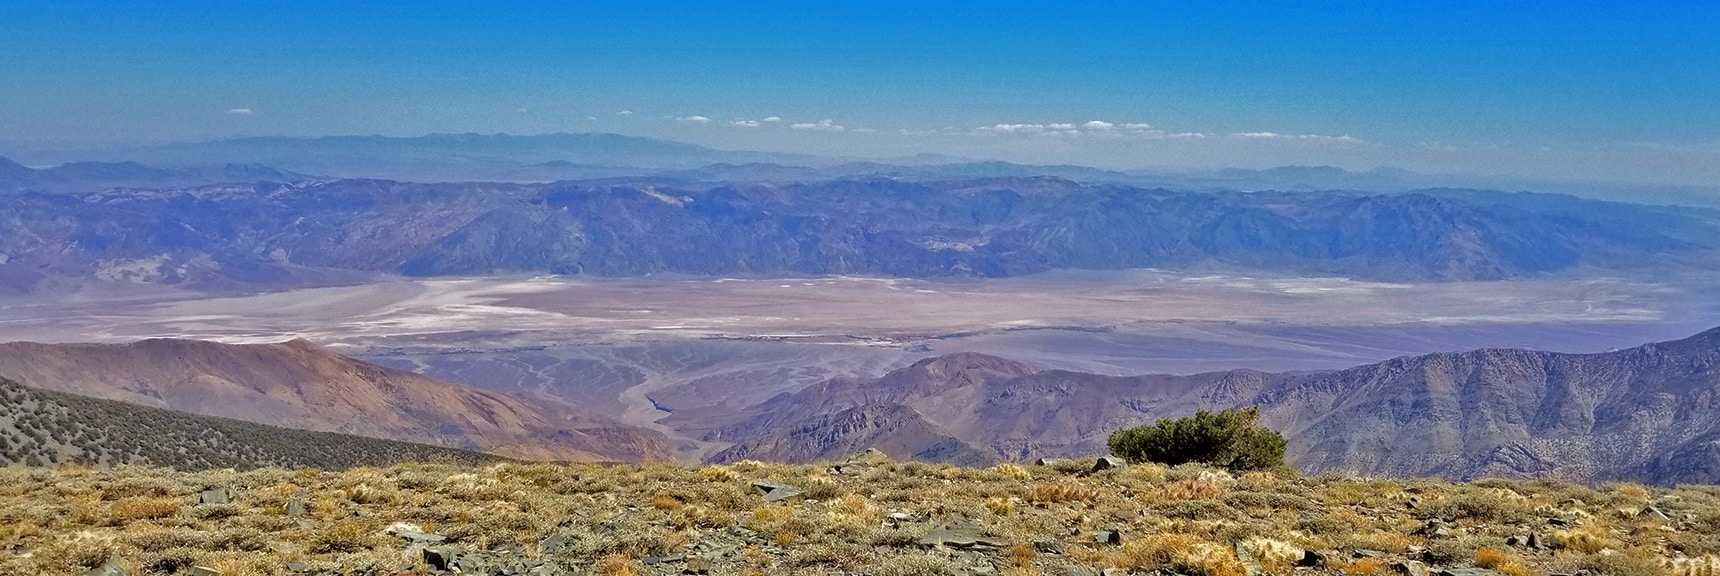 Death Valley Floor, Funeral Mountains and Mt. Charleston Wilderness from Bennett Peak Summit | Telescope Peak Summit from Wildrose Charcoal Kilns Parking Area, Panamint Mountains, Death Valley National Park, California